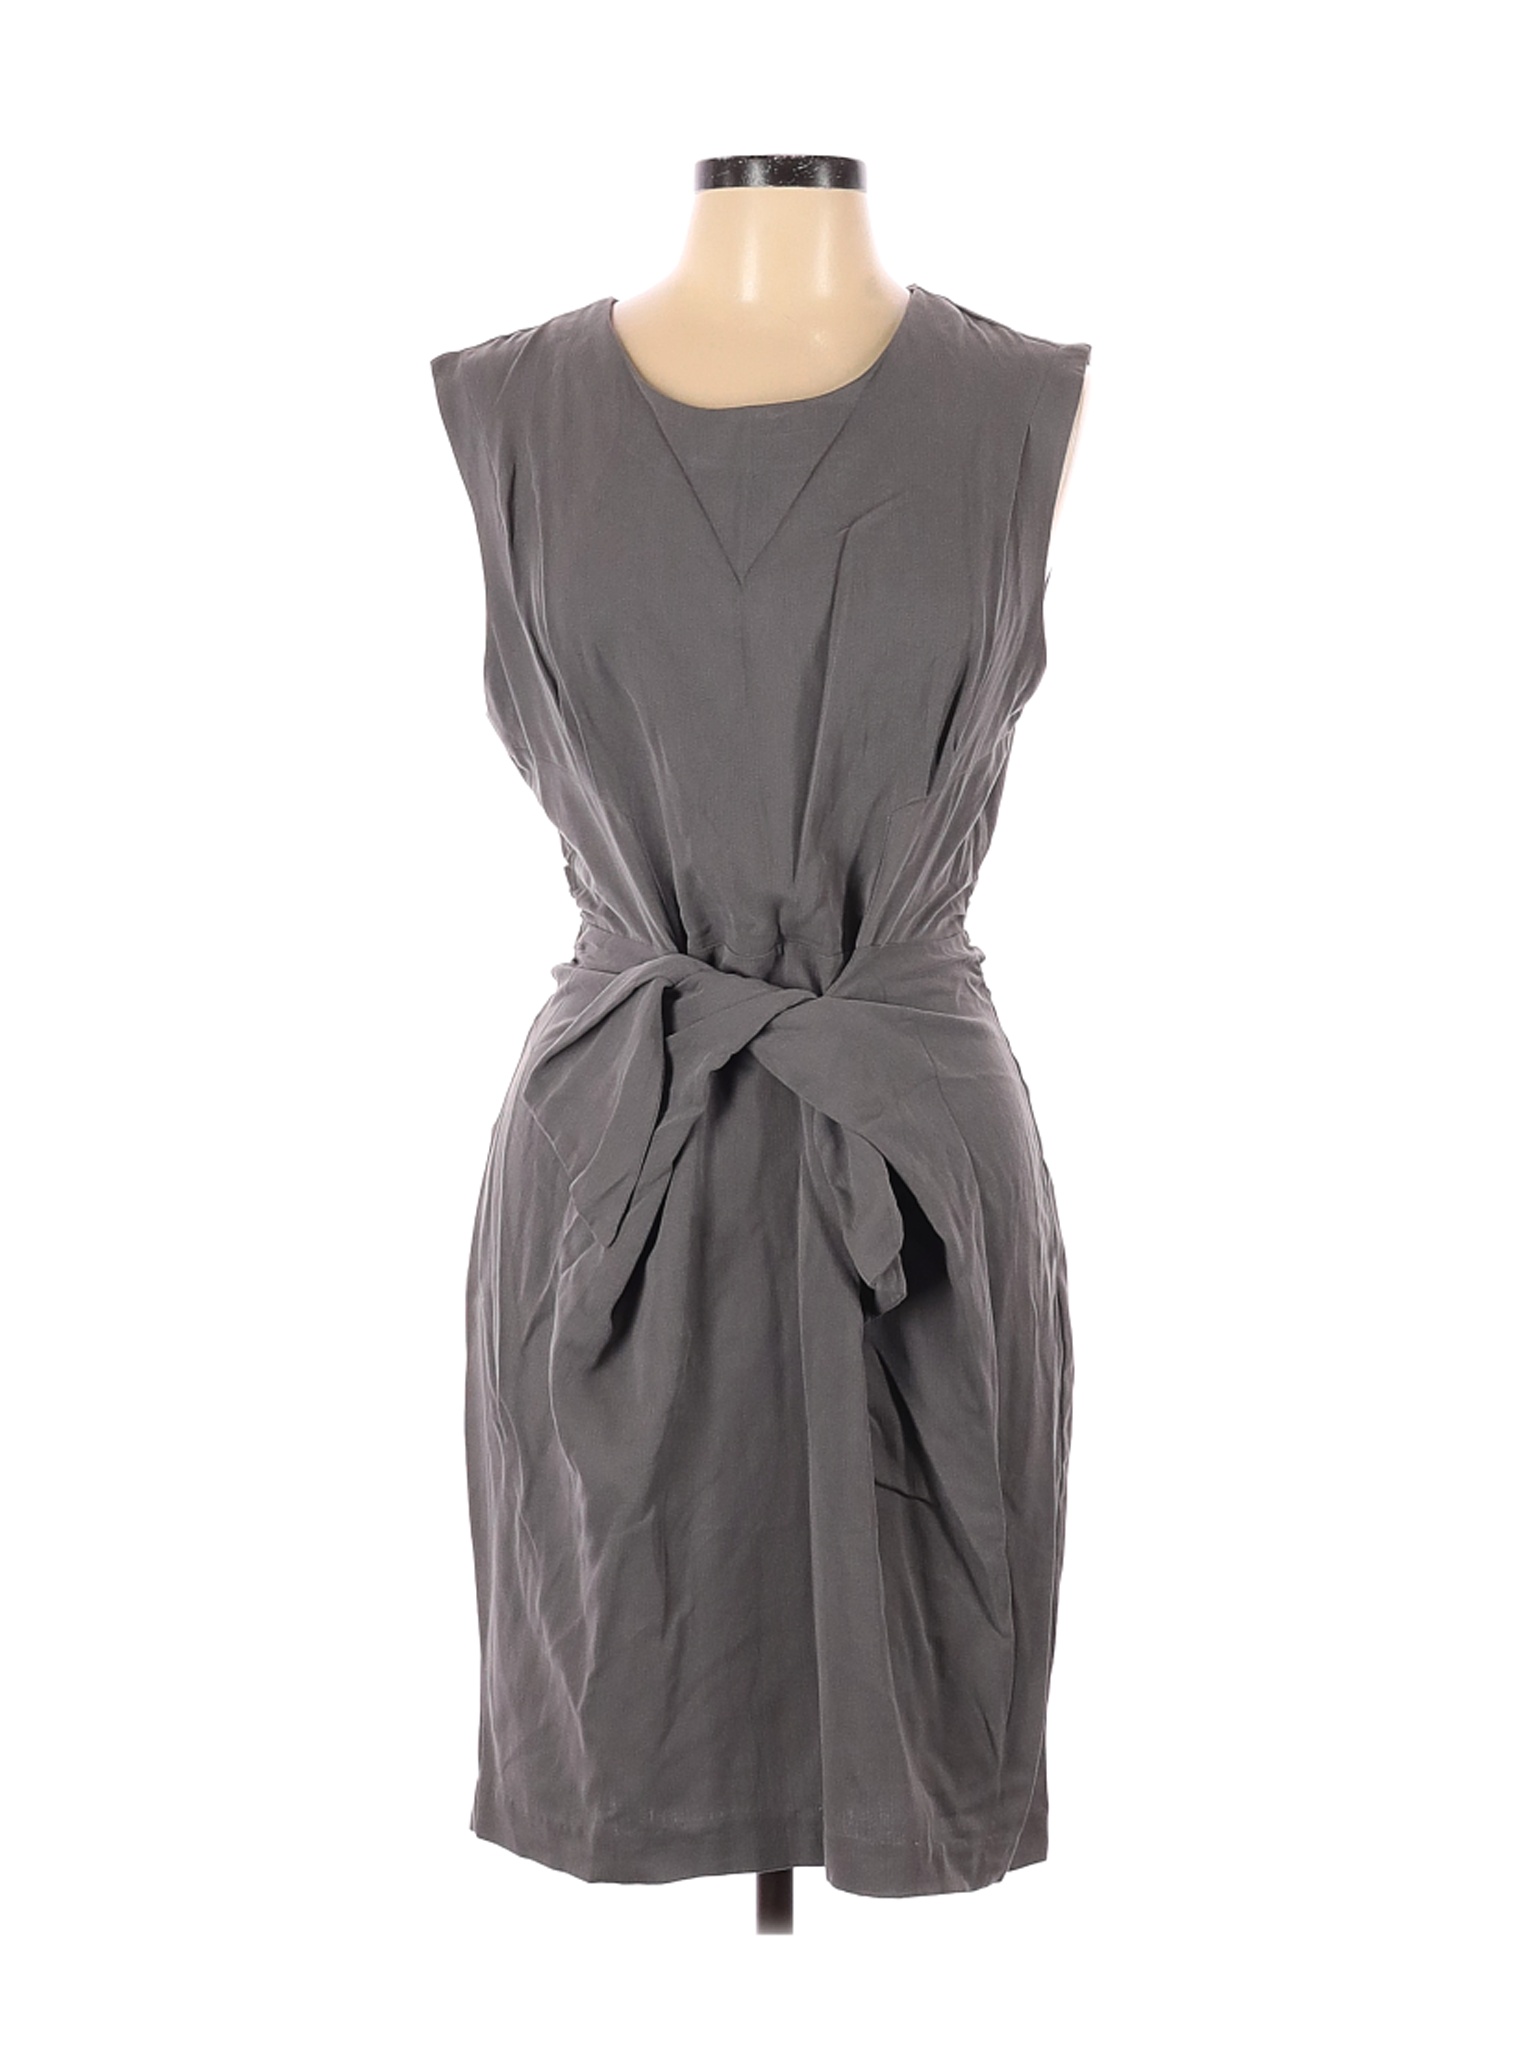 NWT HD in Paris Women Gray Cocktail Dress 12 | eBay